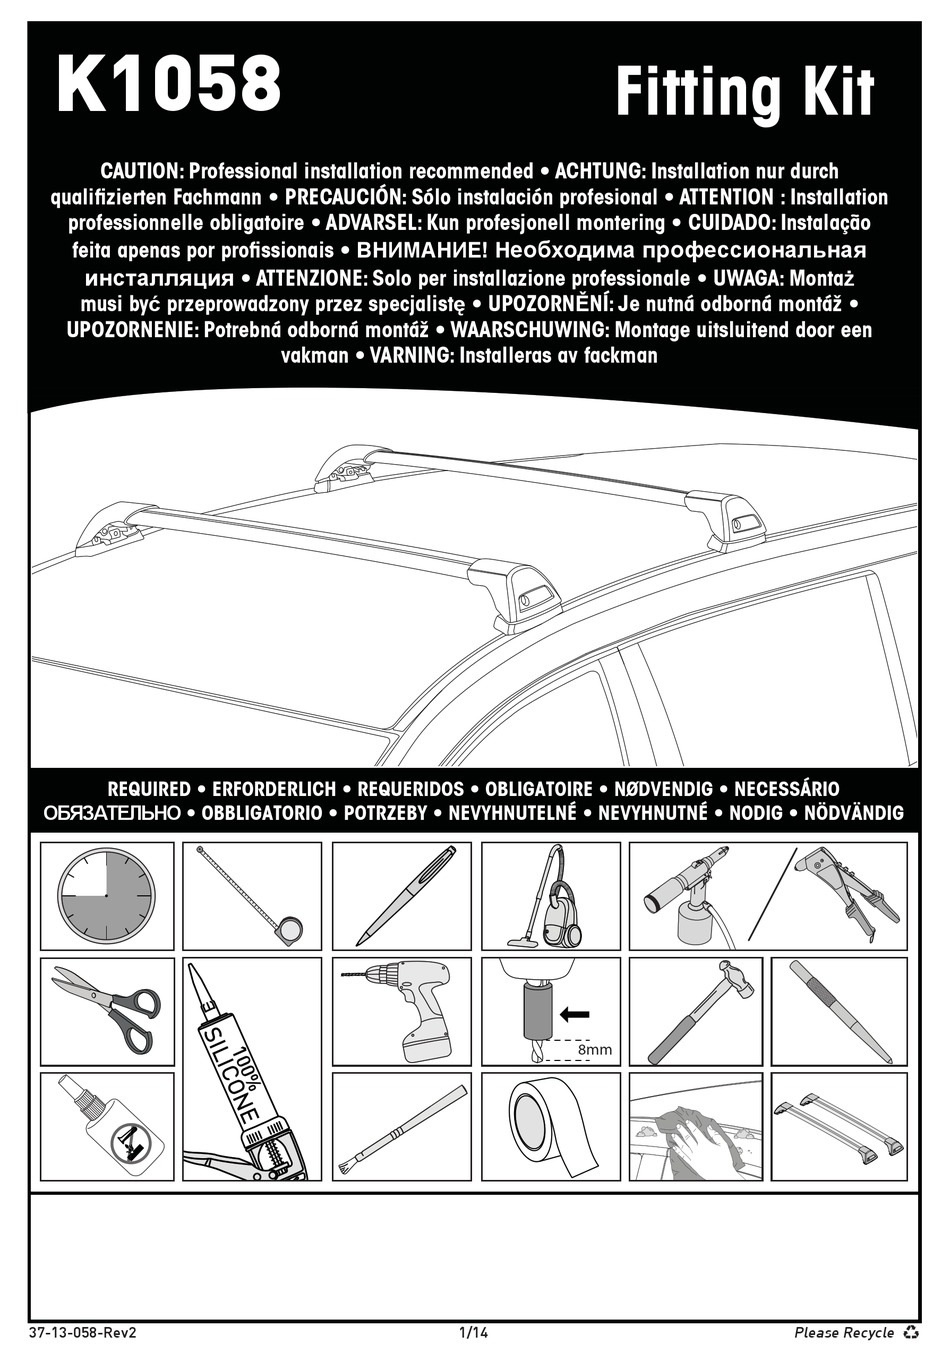 yakima rocketbox installation instructions